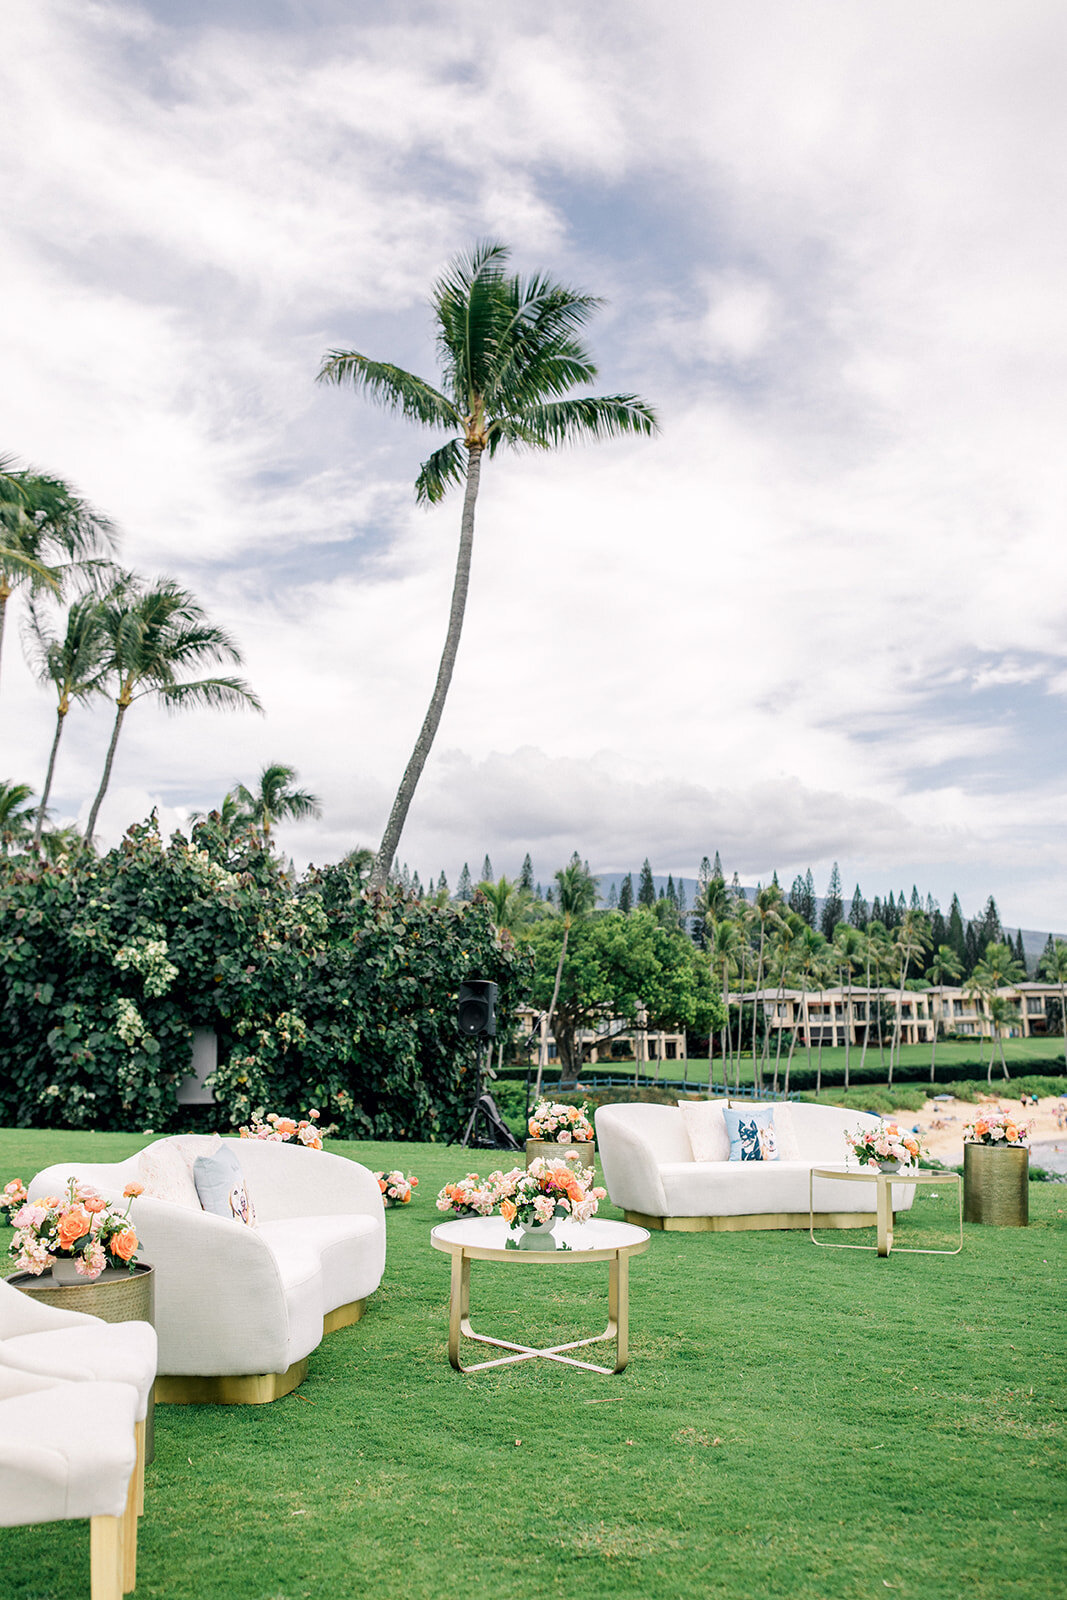 Maui Love Weddings and Events Maui Hawaii Full Service Wedding Planning Coordinating Event Design Company Destination Wedding 11